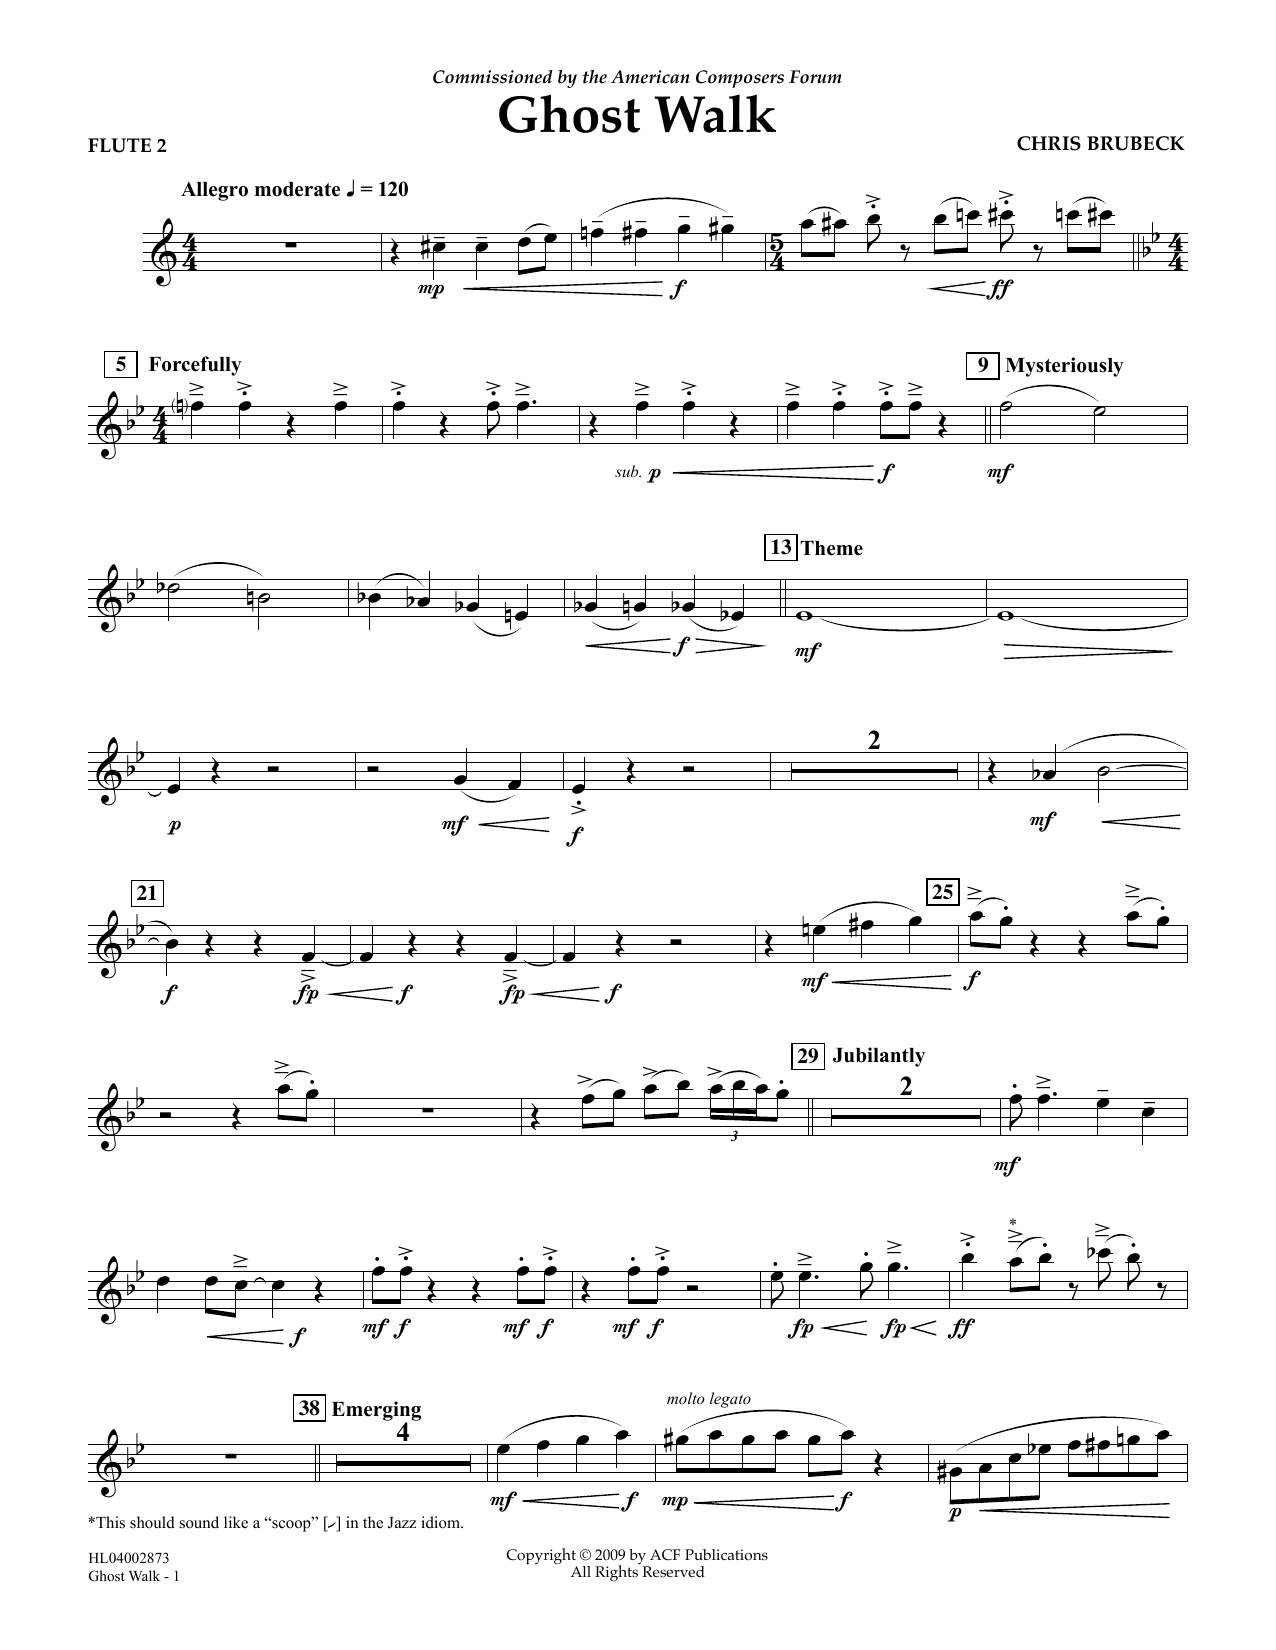 Chris Brubeck Ghost Walk - Flute 2 Sheet Music Notes & Chords for Concert Band - Download or Print PDF